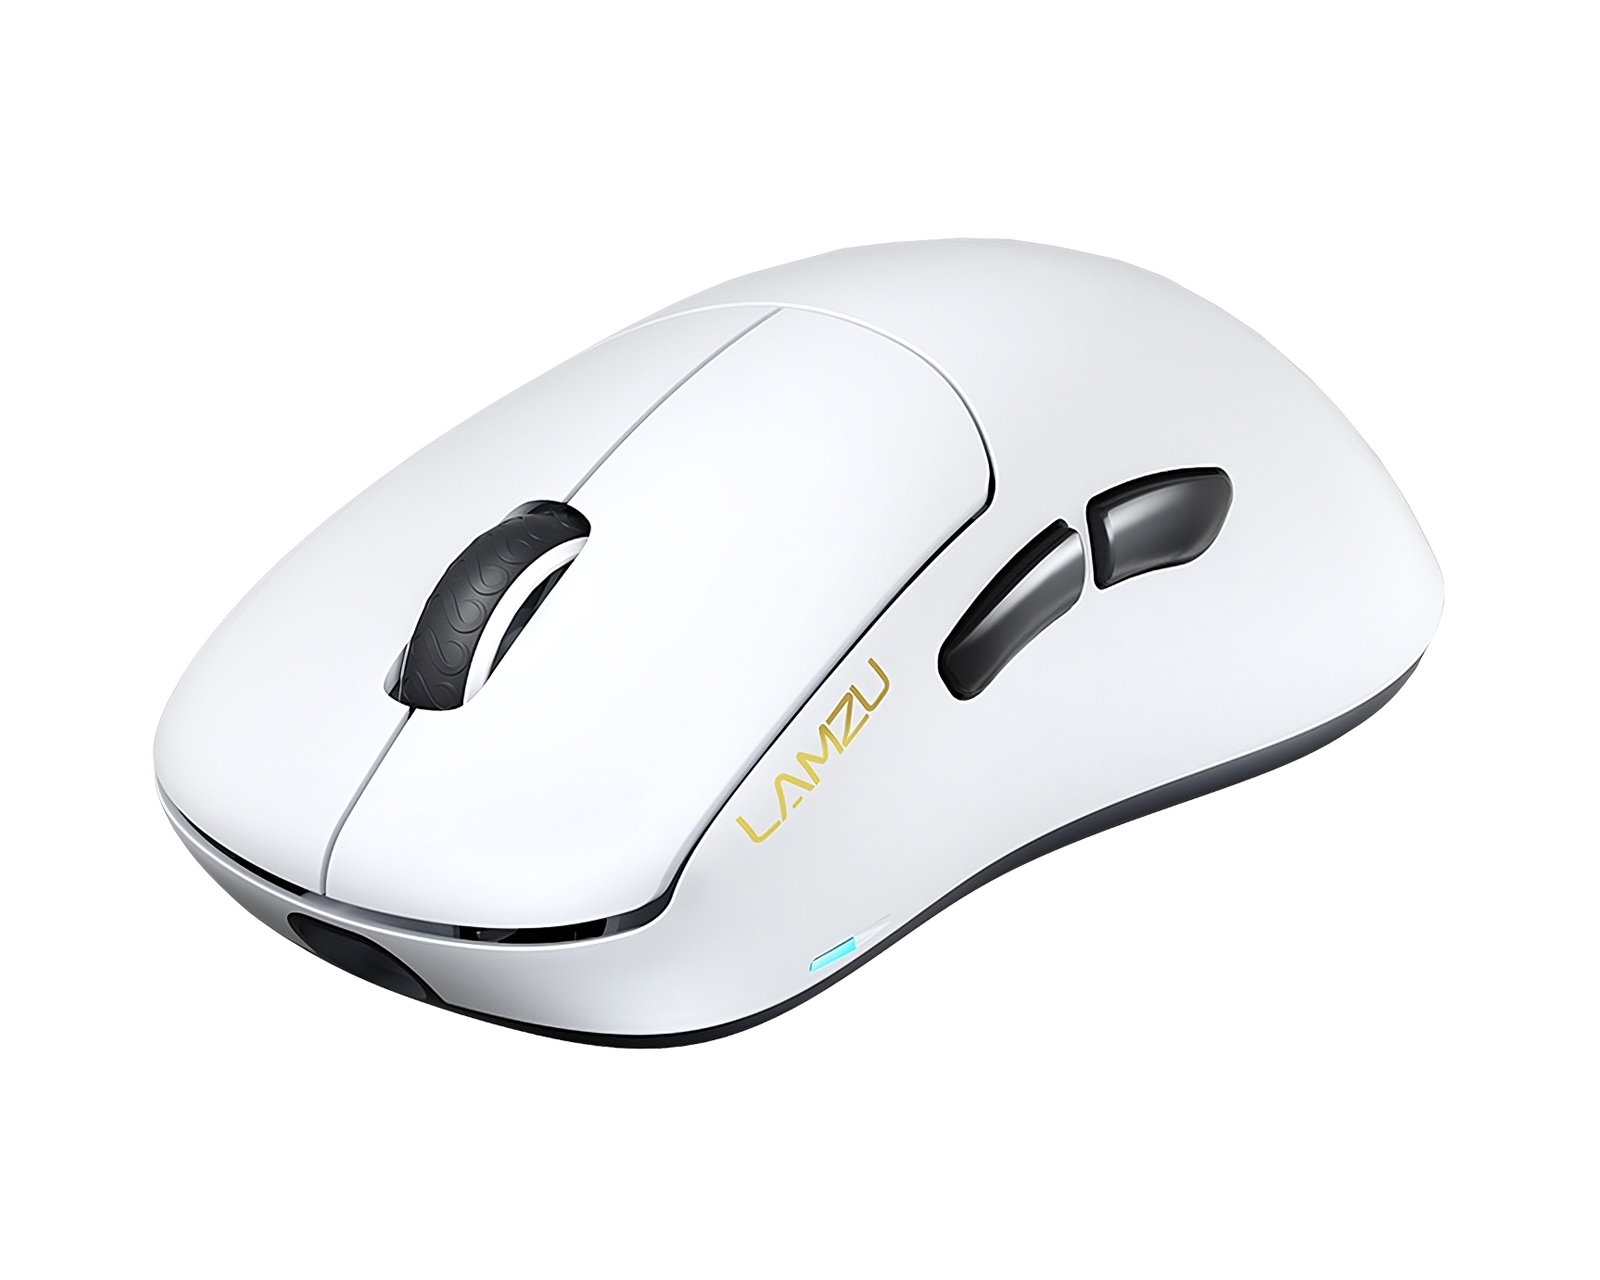 Lamzu Thorn Wireless Superlight Gaming Mouse - White